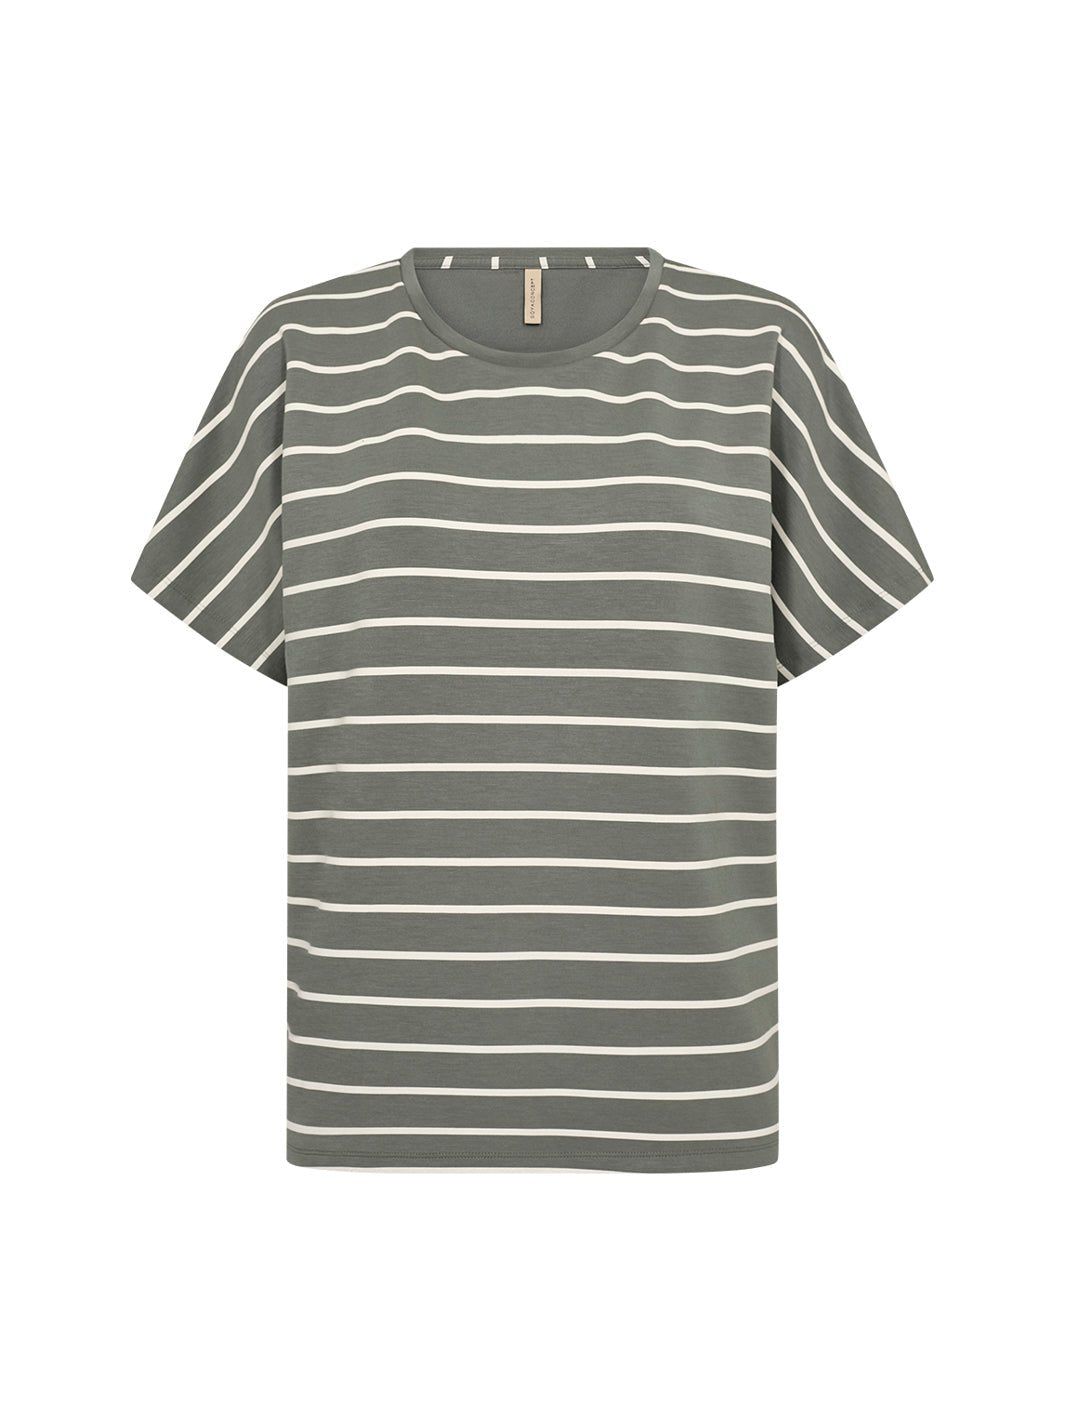 Soya Concept Barni 22 t-shirt dusty olive/creme - Online-Mode